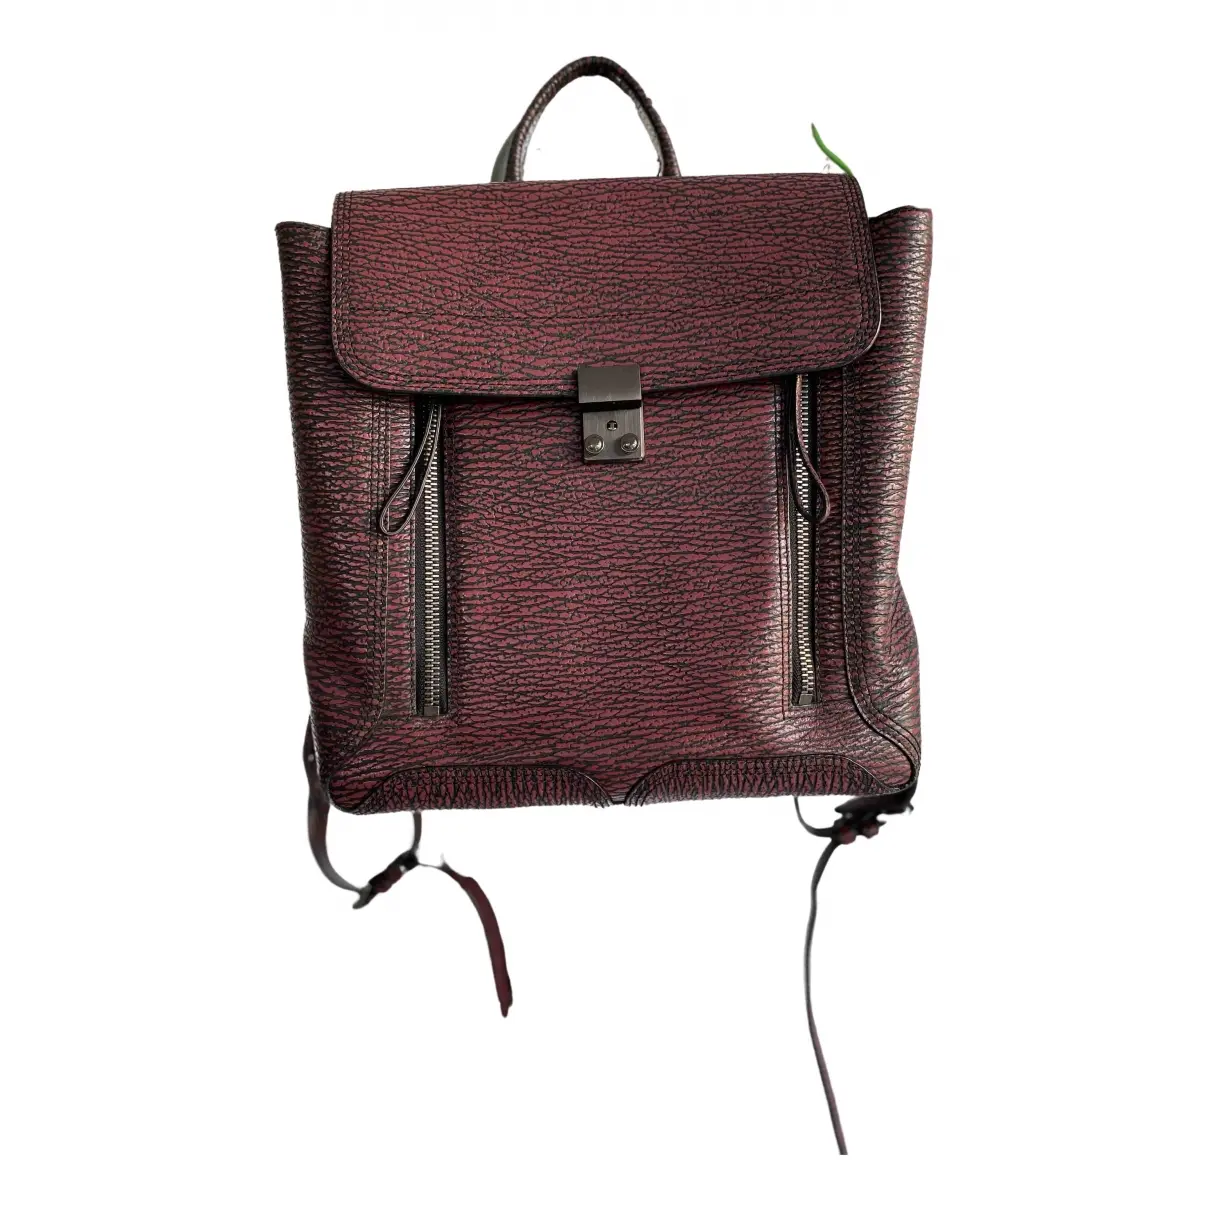 Pashli leather backpack 3.1 Phillip Lim